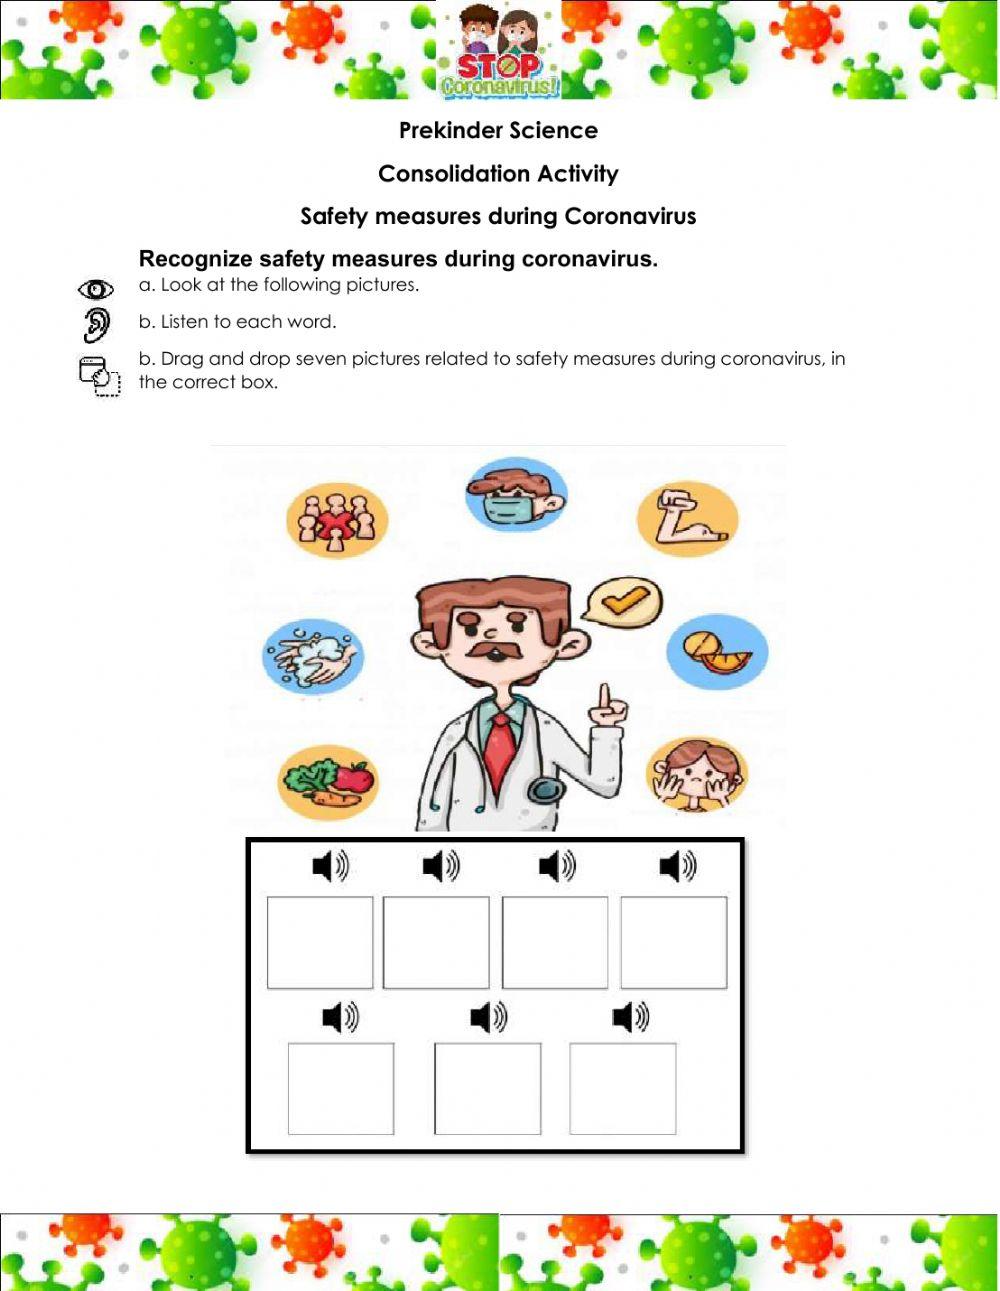 Safety Measures during Coronavirus